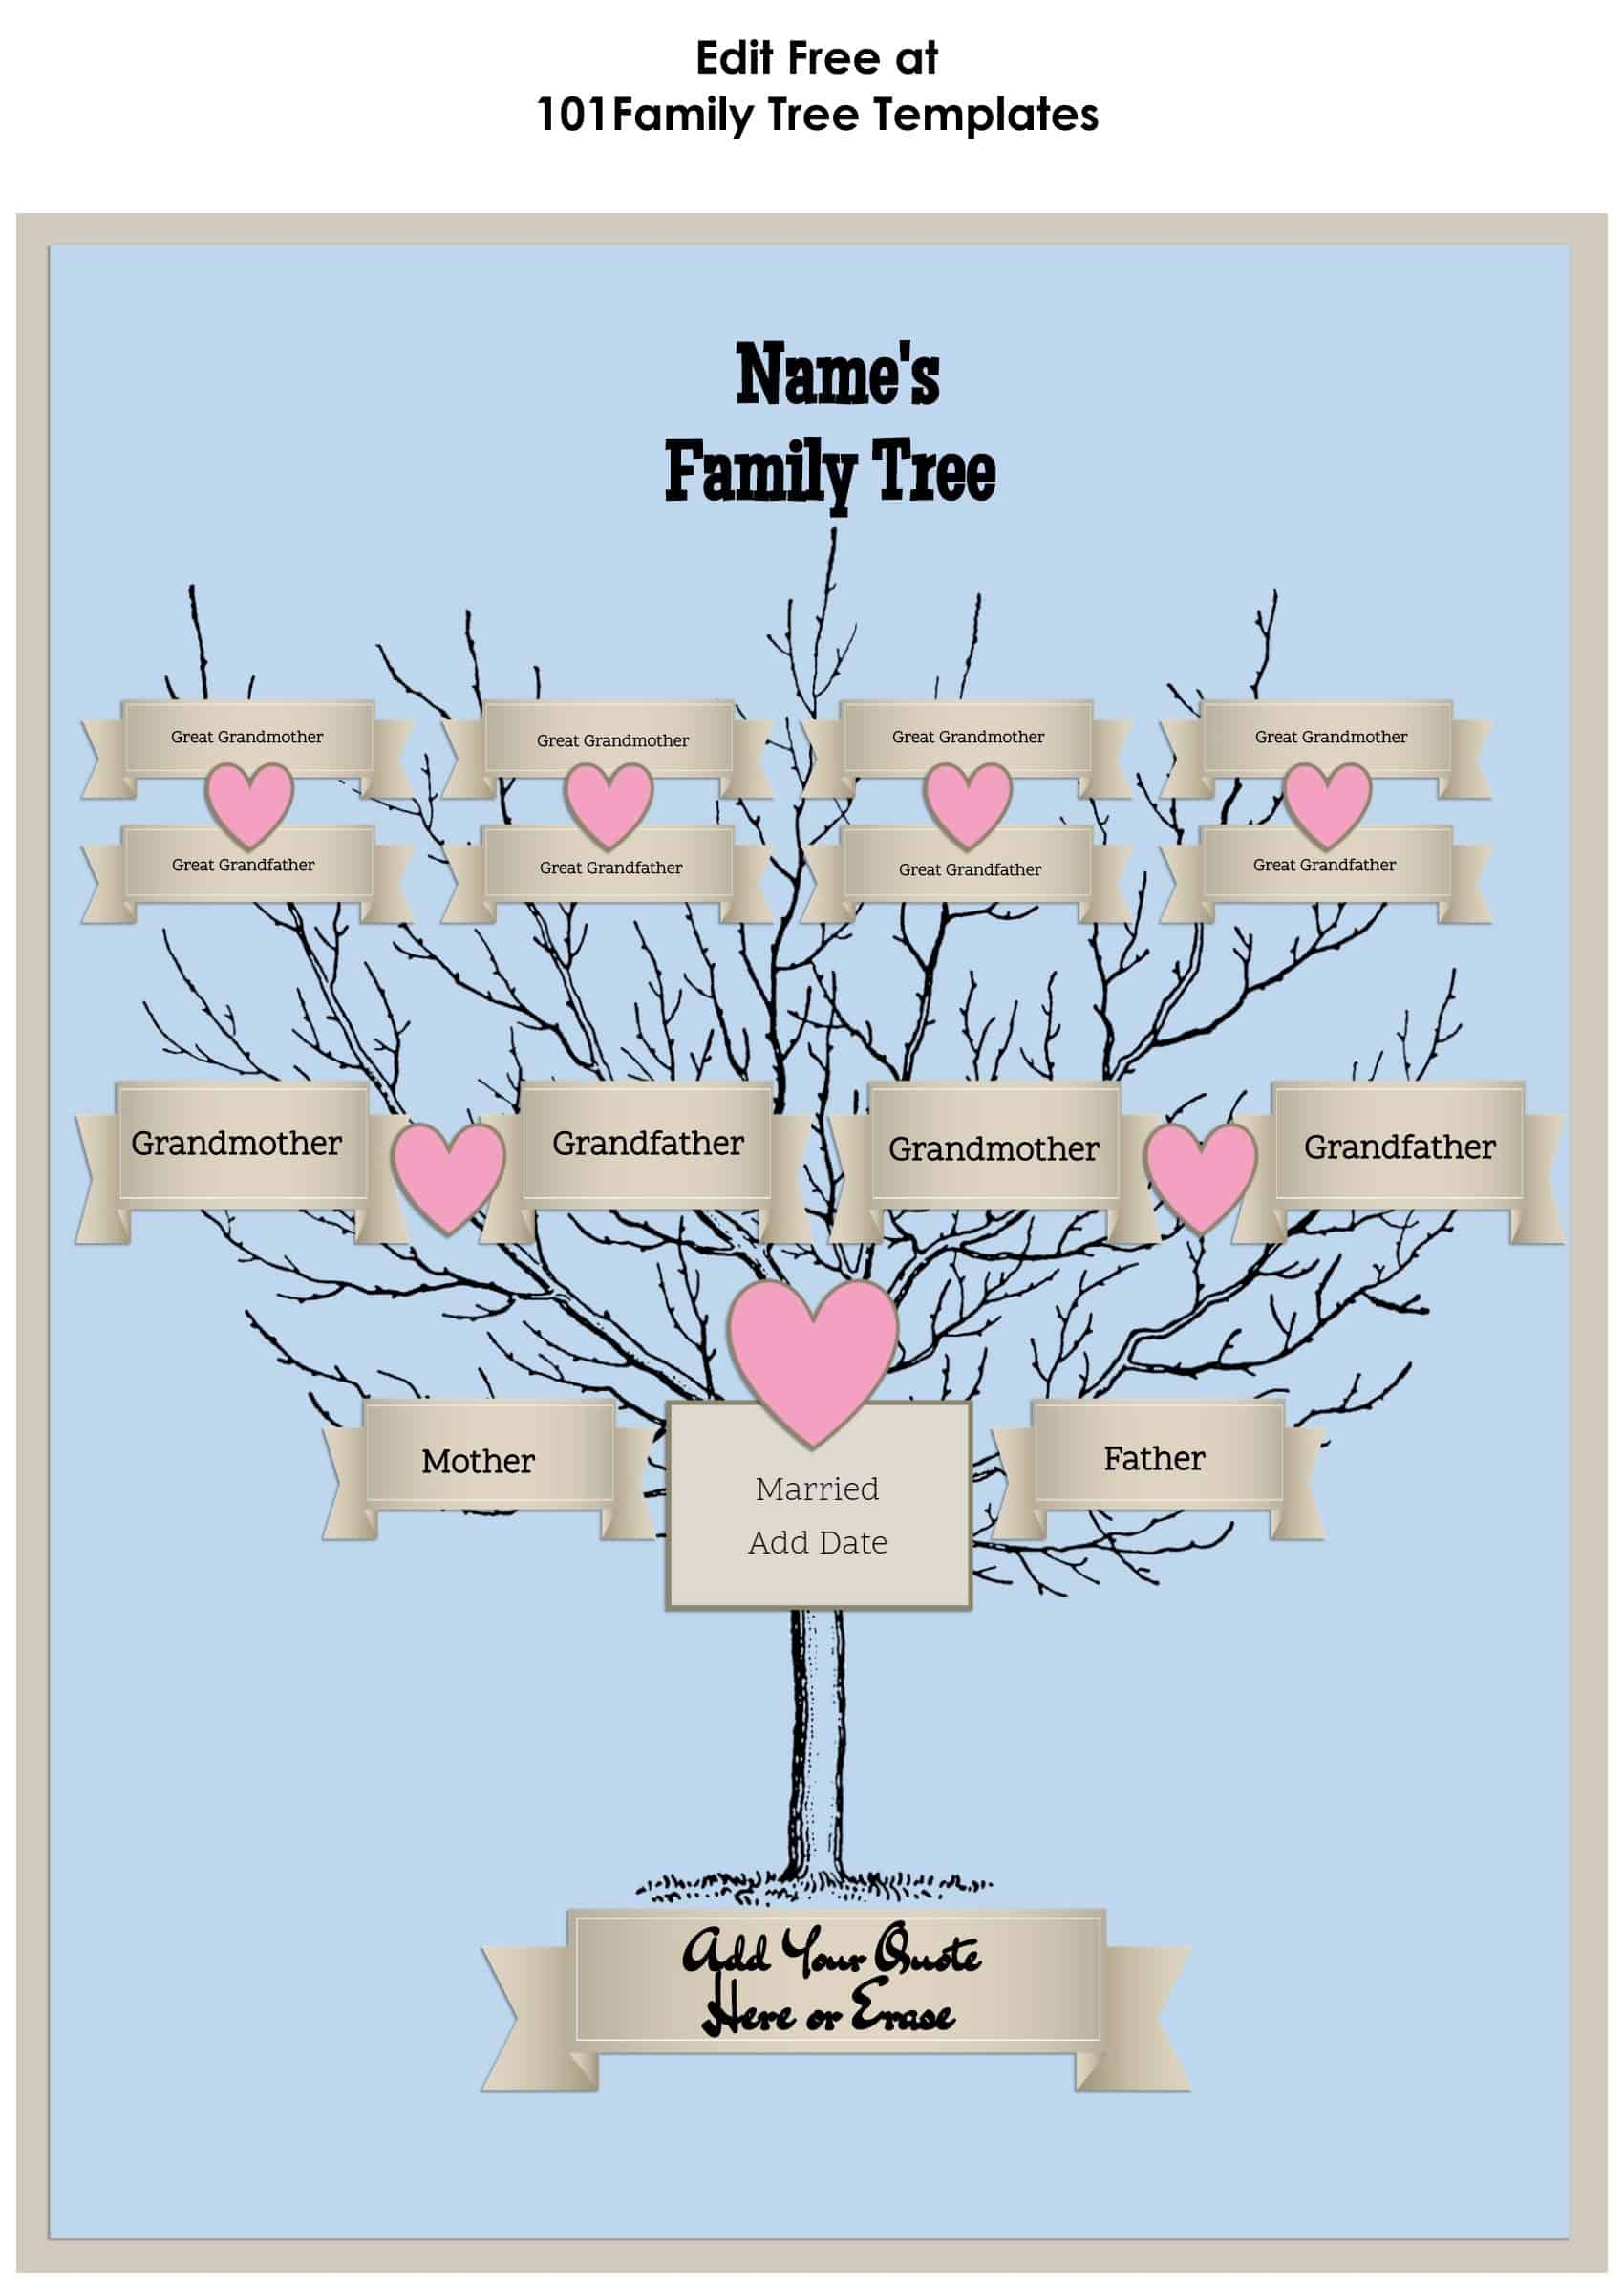 10 Generation Family Tree Generator  All Templates are Free to  Regarding Blank Family Tree Template 3 Generations